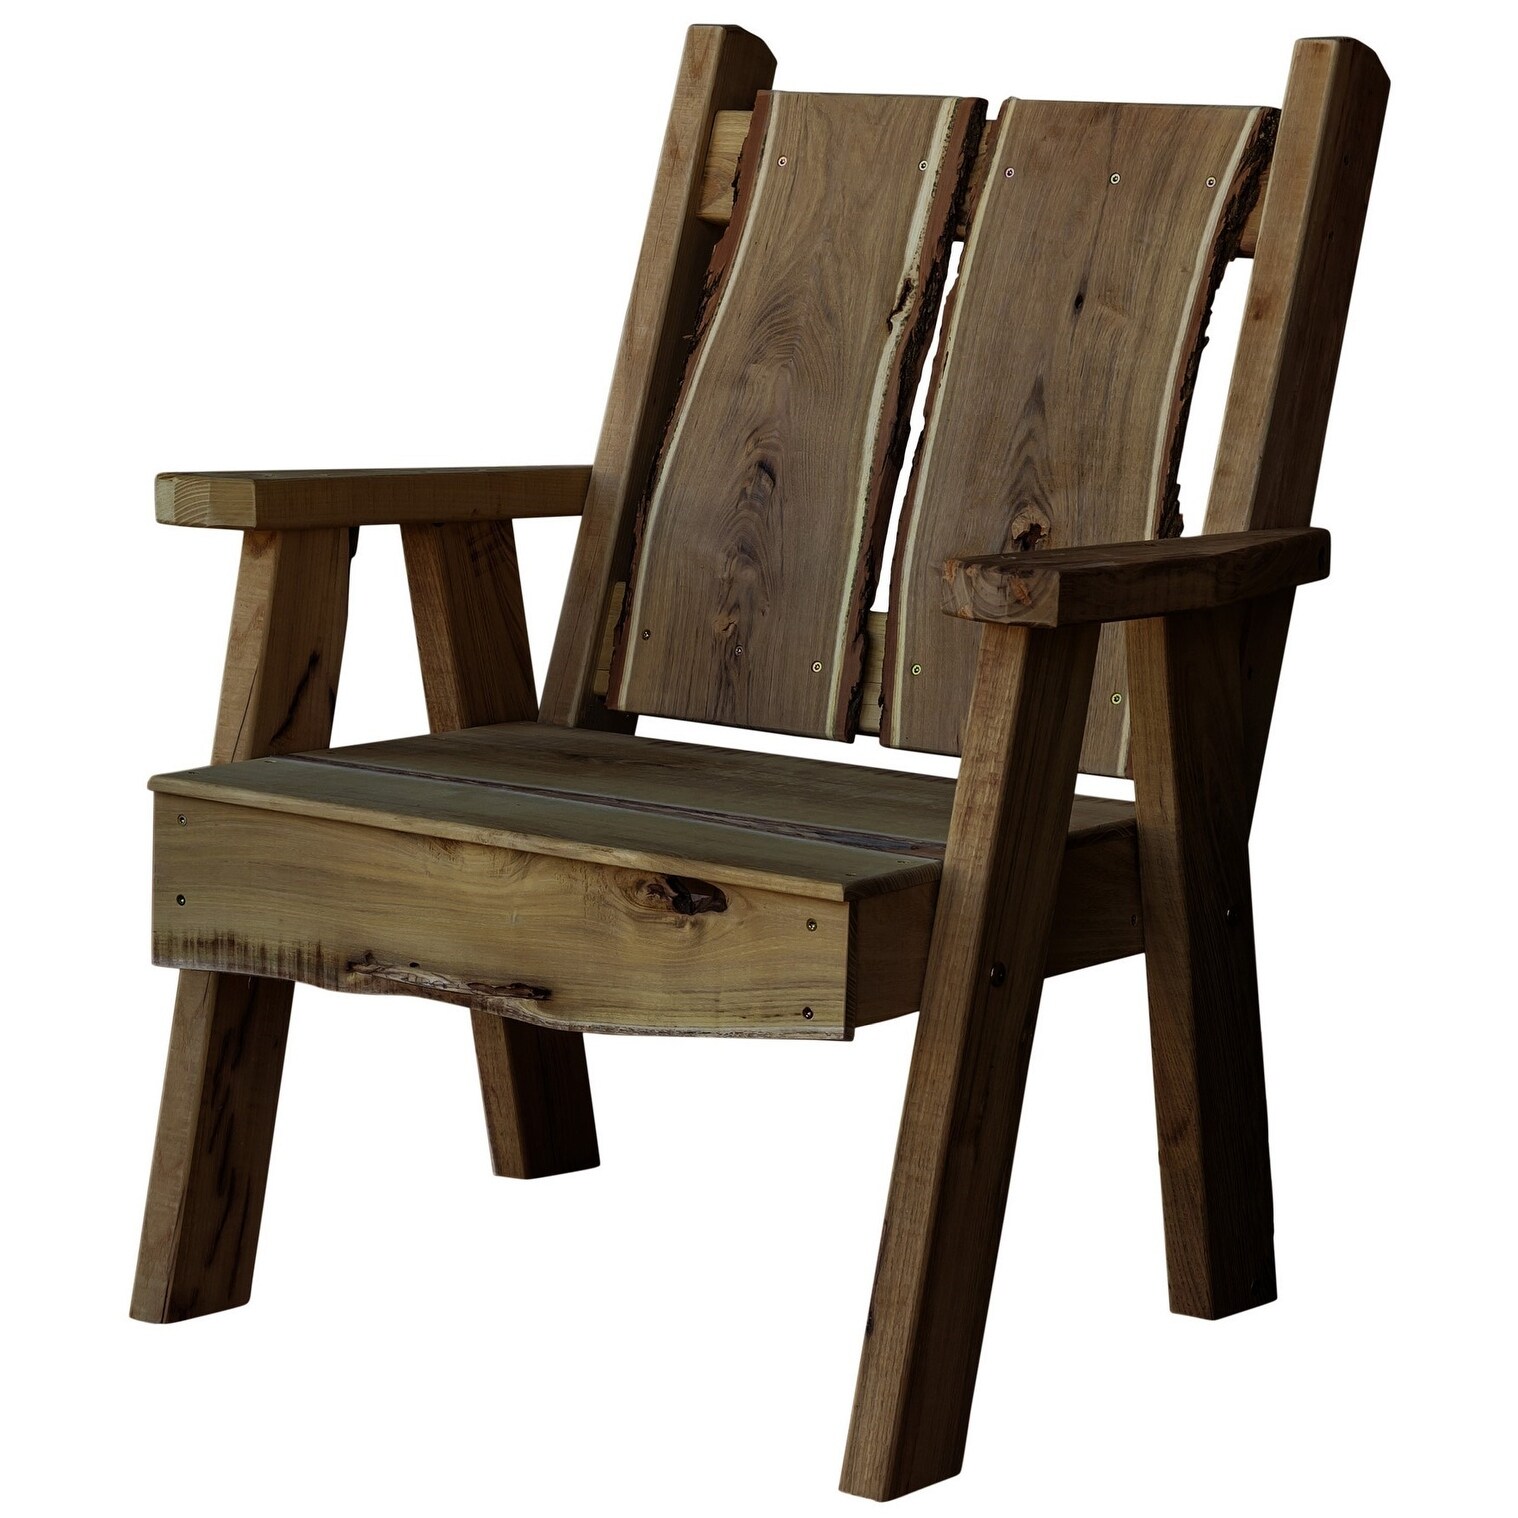 Live Edge Locust Wood Timberland Chair - On Sale - Bed Bath & Beyond -  34134042